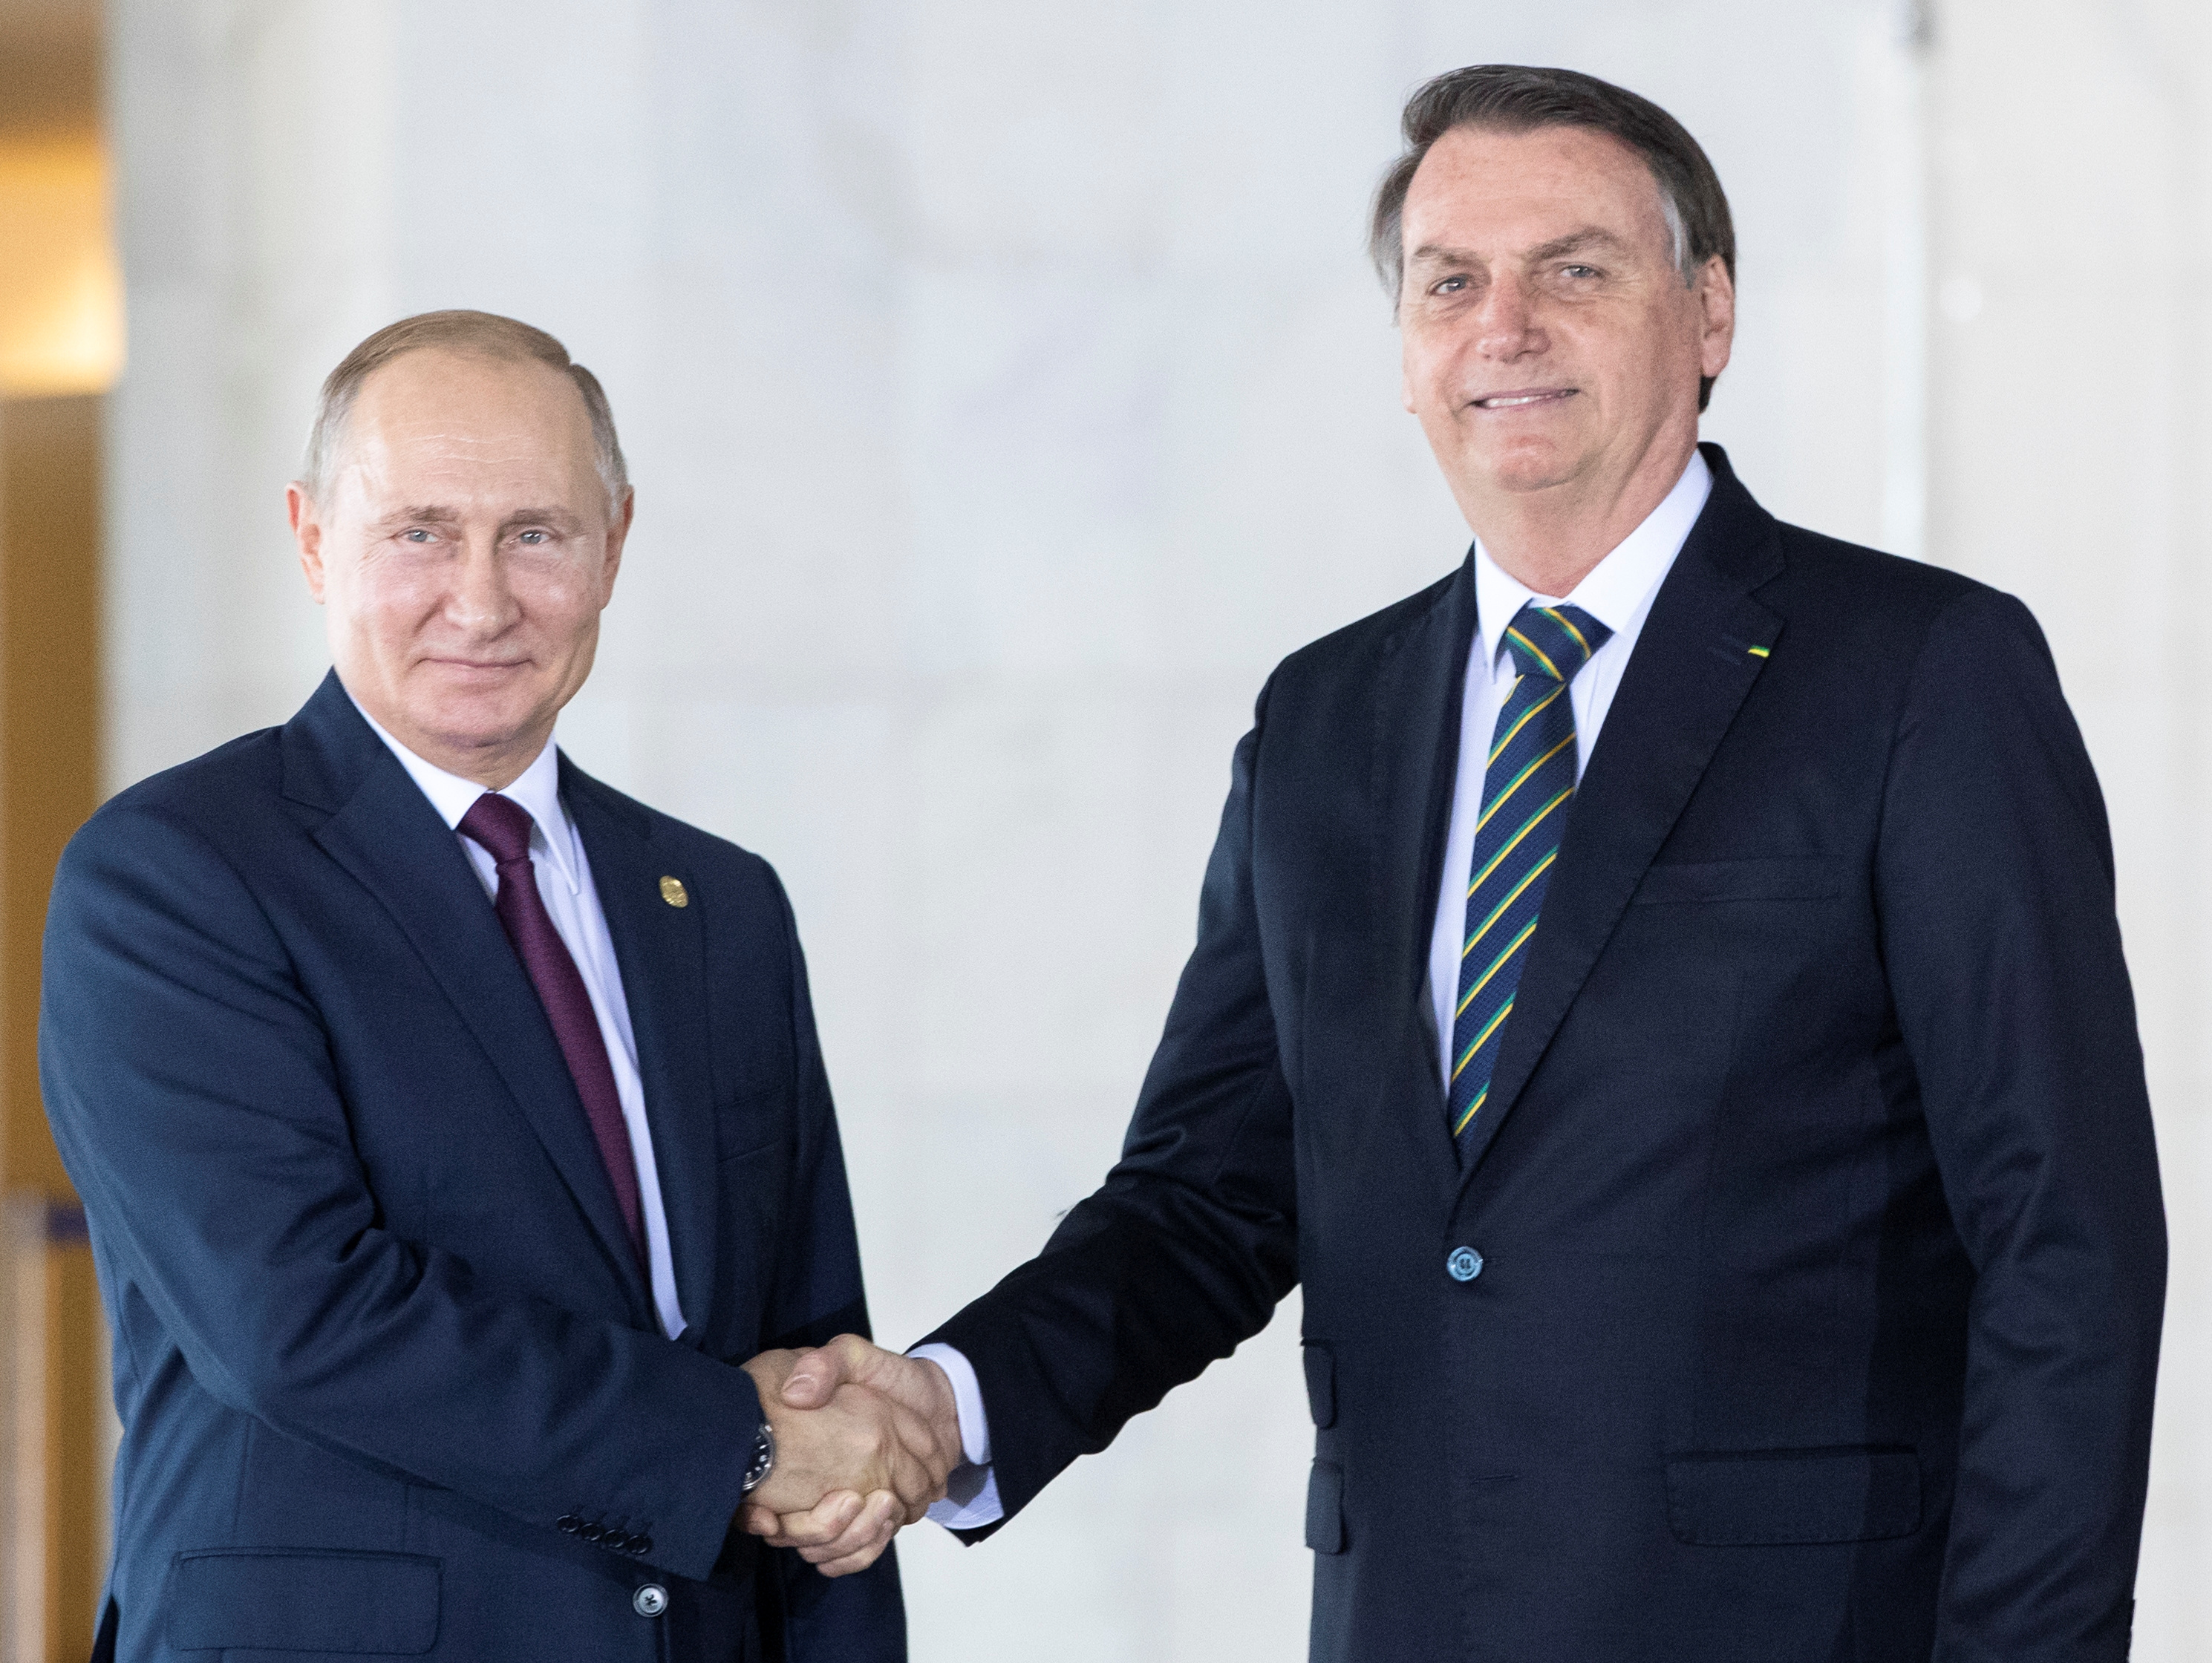 Brazil's President Jair Bolsonaro welcomes Russia's President Vladimir Putin to a meeting of leaders of the BRICS emerging economies at the Itamaraty palace in Brasilia